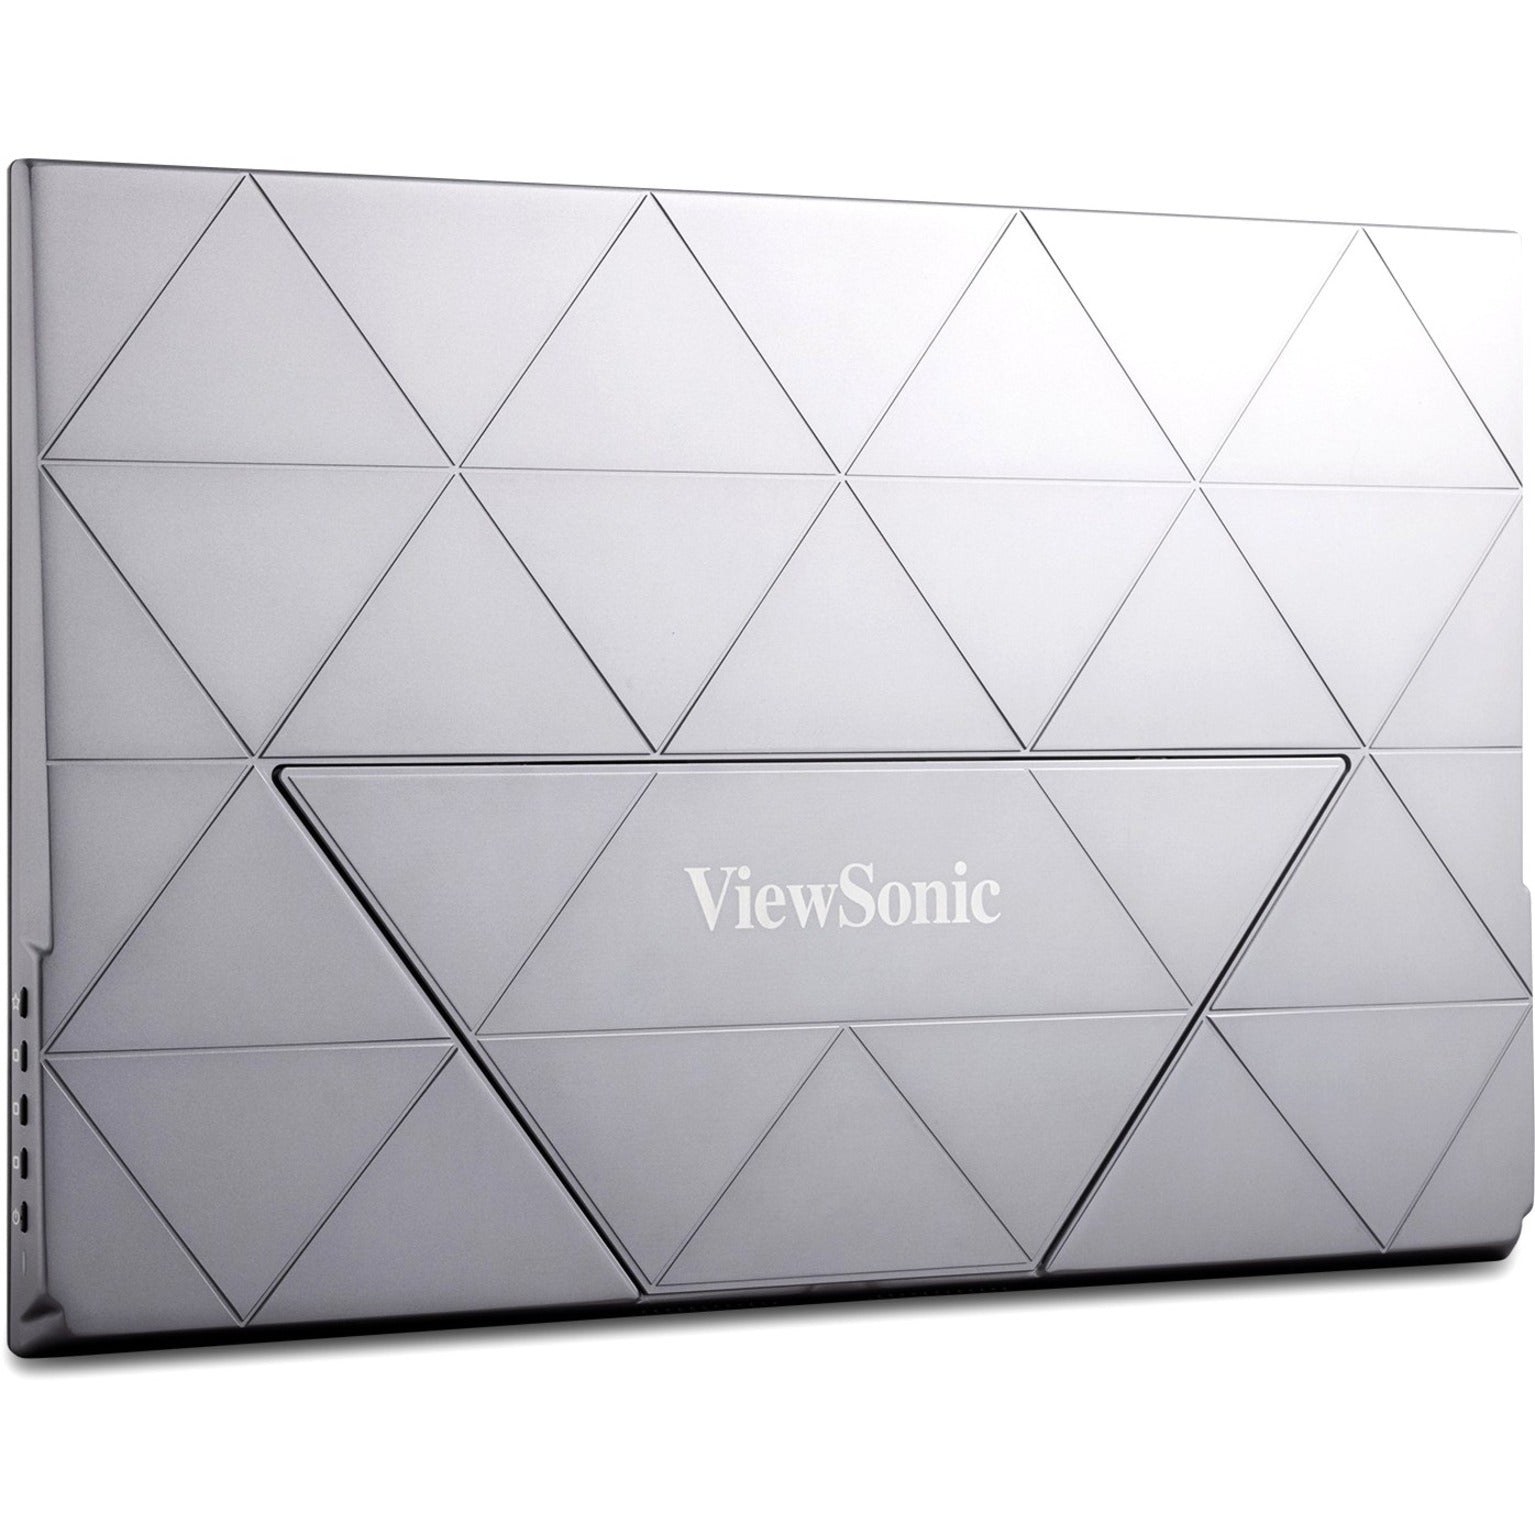 ViewSonic VX1755 17" Portable IPS Gaming Monitor, 144Hz Refresh Rate, AMD FreeSync Premium